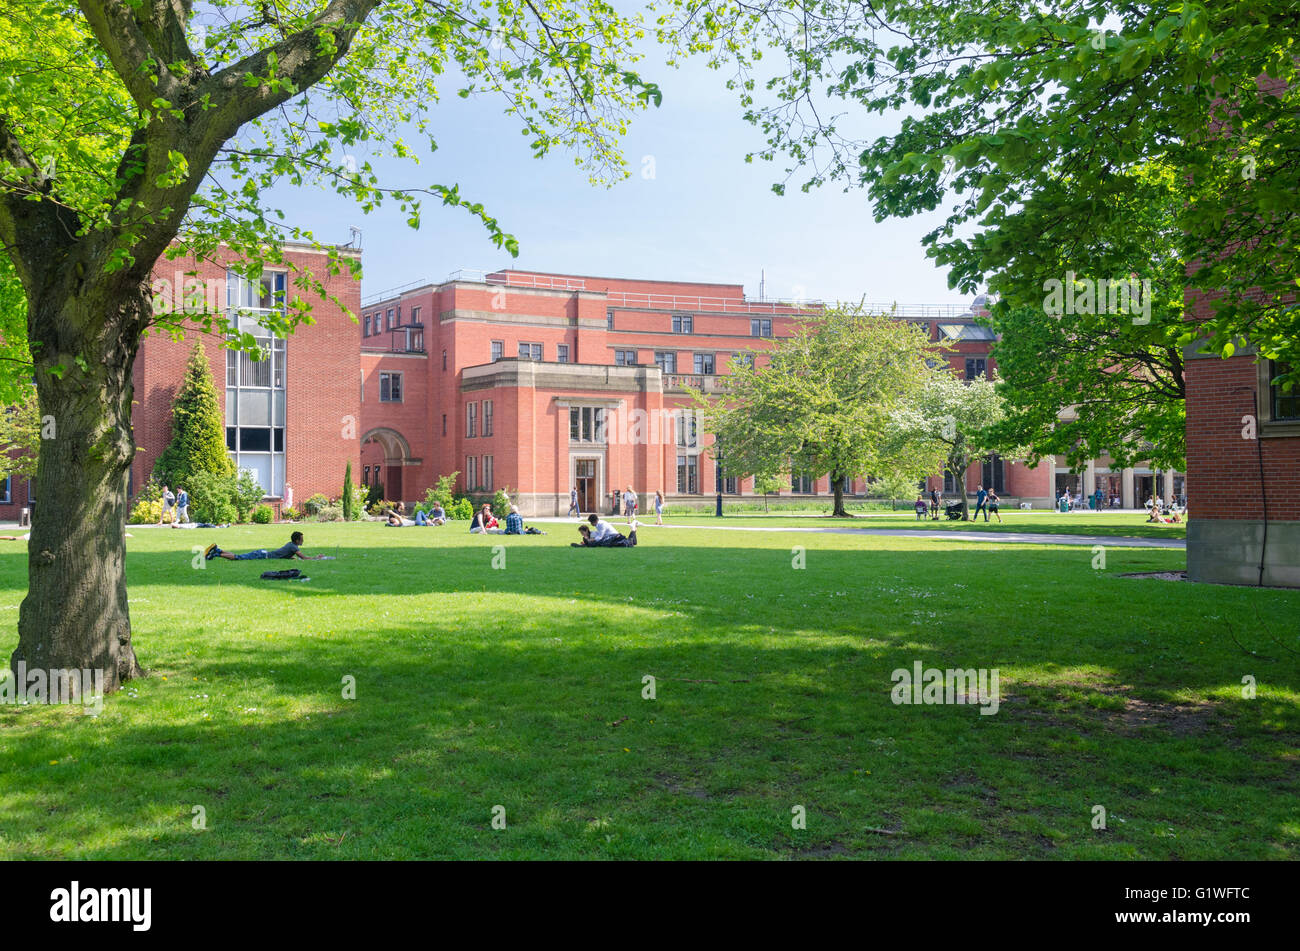 Green open spaces at Birmingham University campus Stock Photo